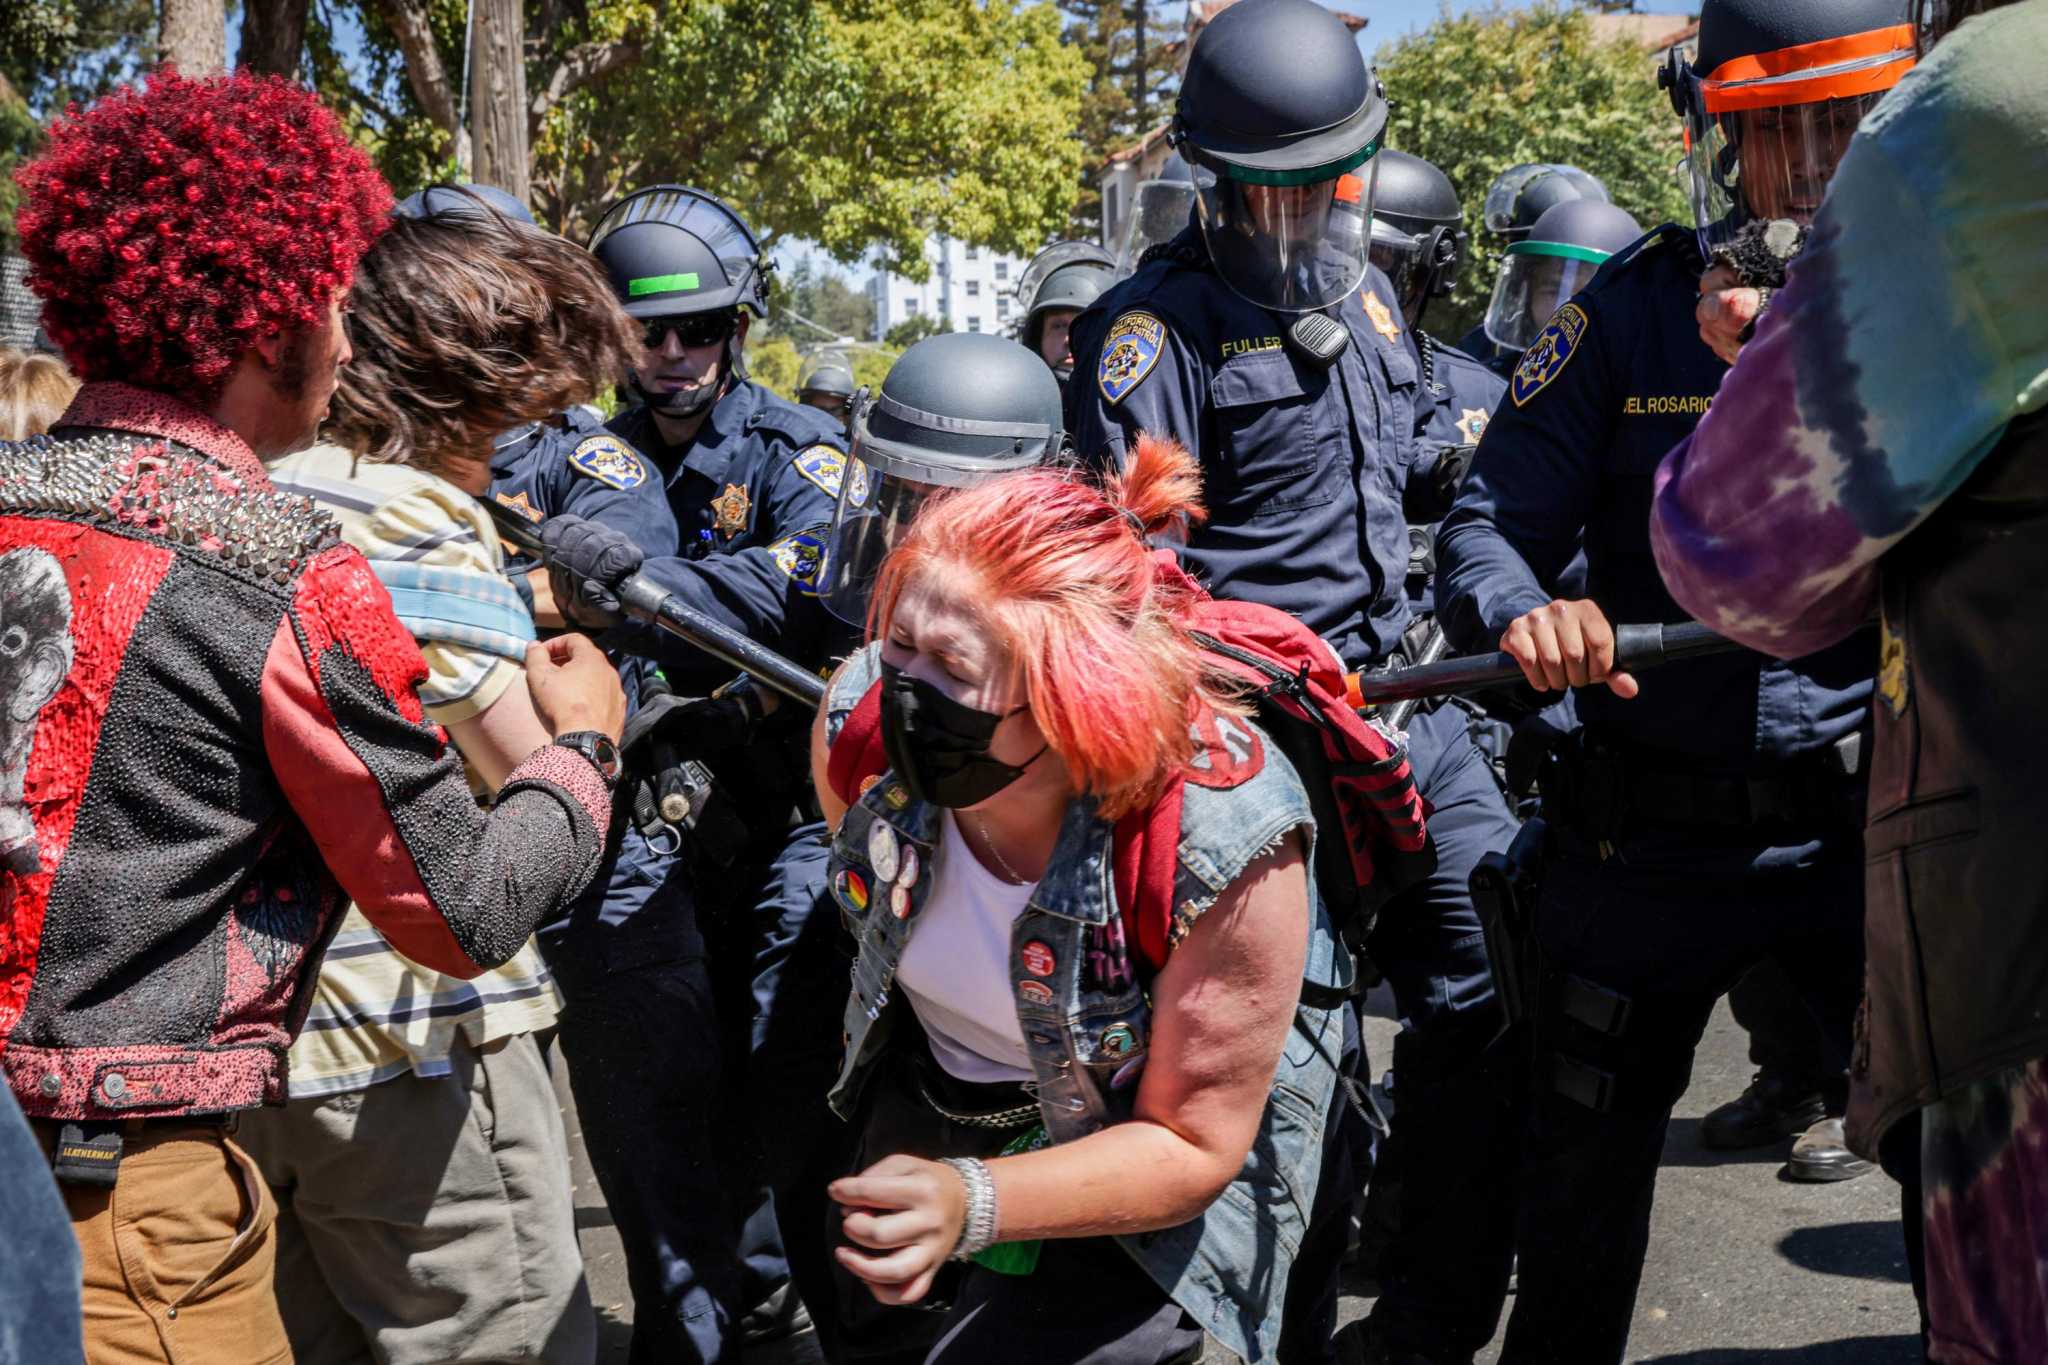 More planned violence, Battle for Berkeley